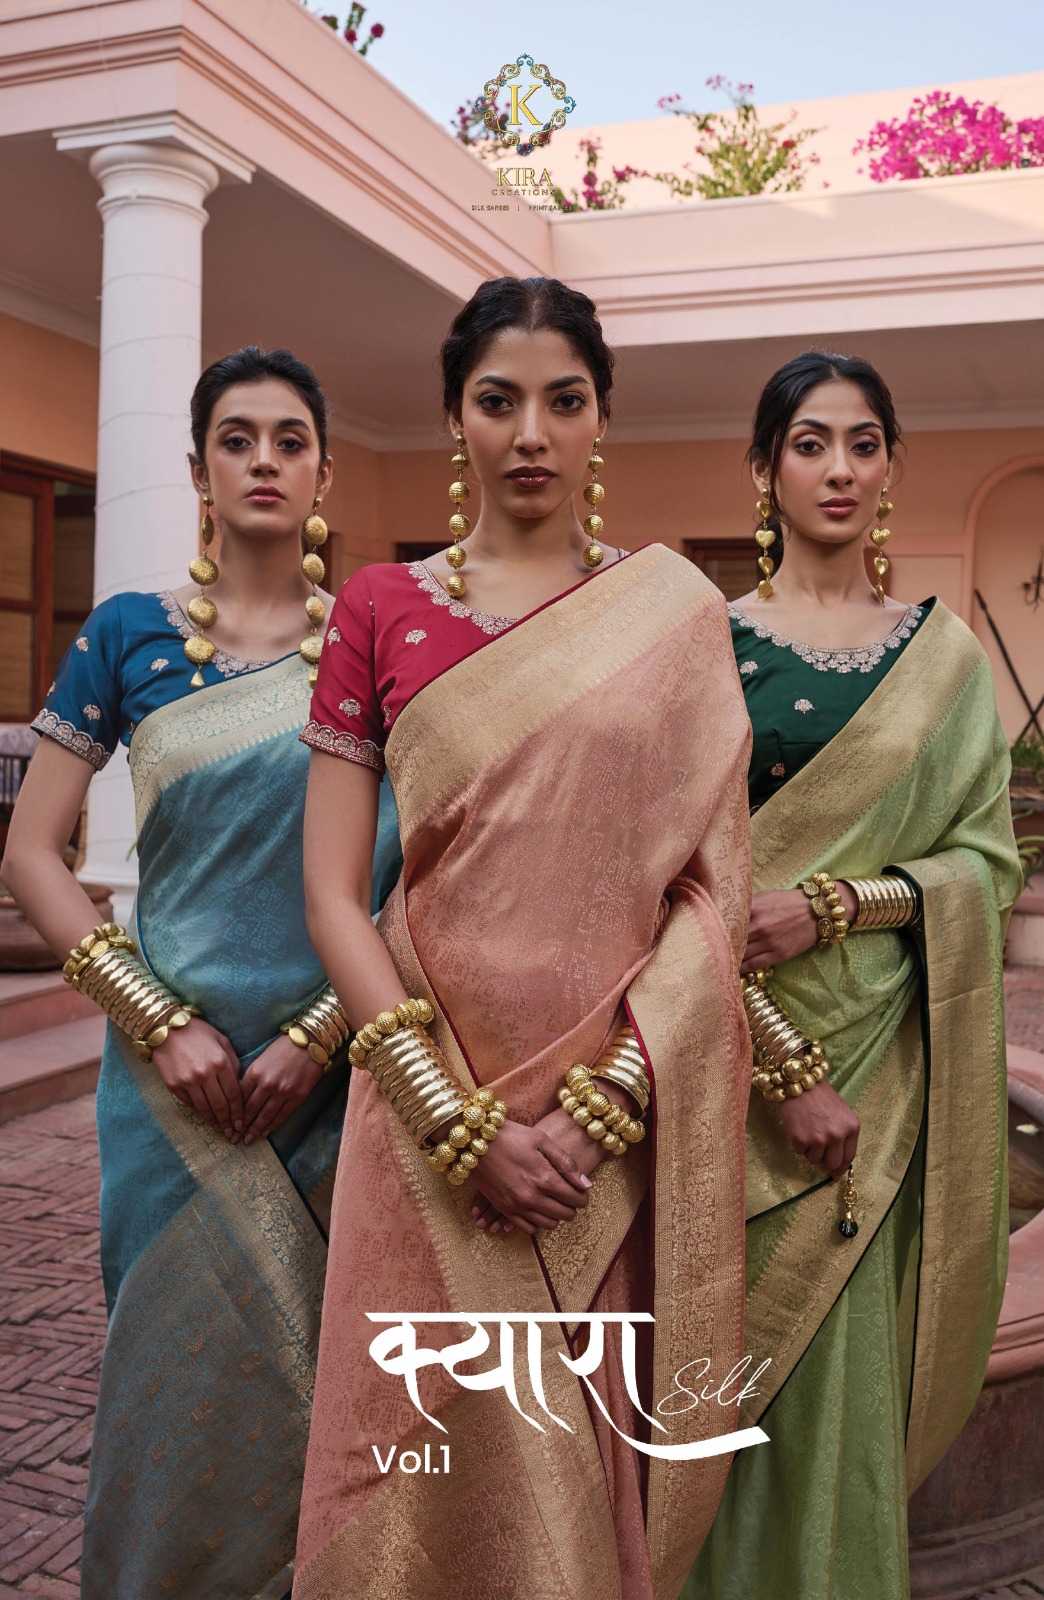 kira creation kyara silk vol 1 2301-2306 wedding wear classy look silk sarees 